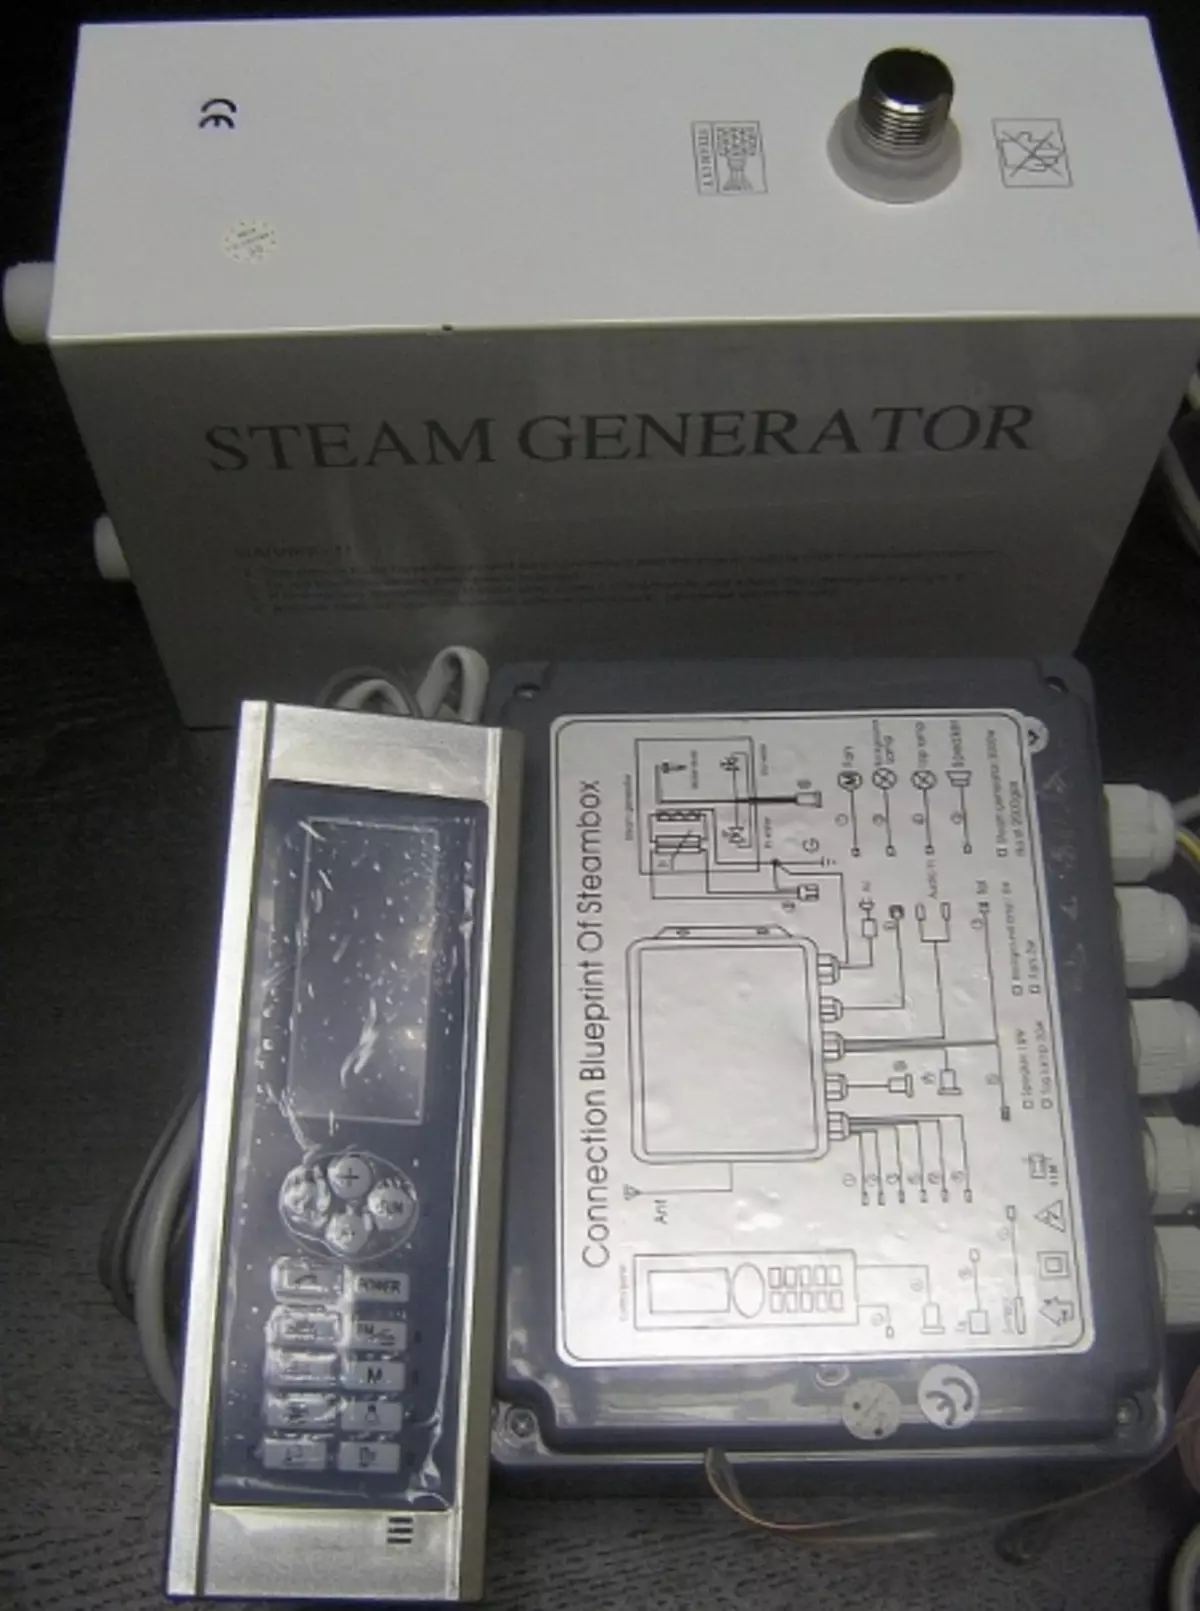 Steam generator steam shower фото 103